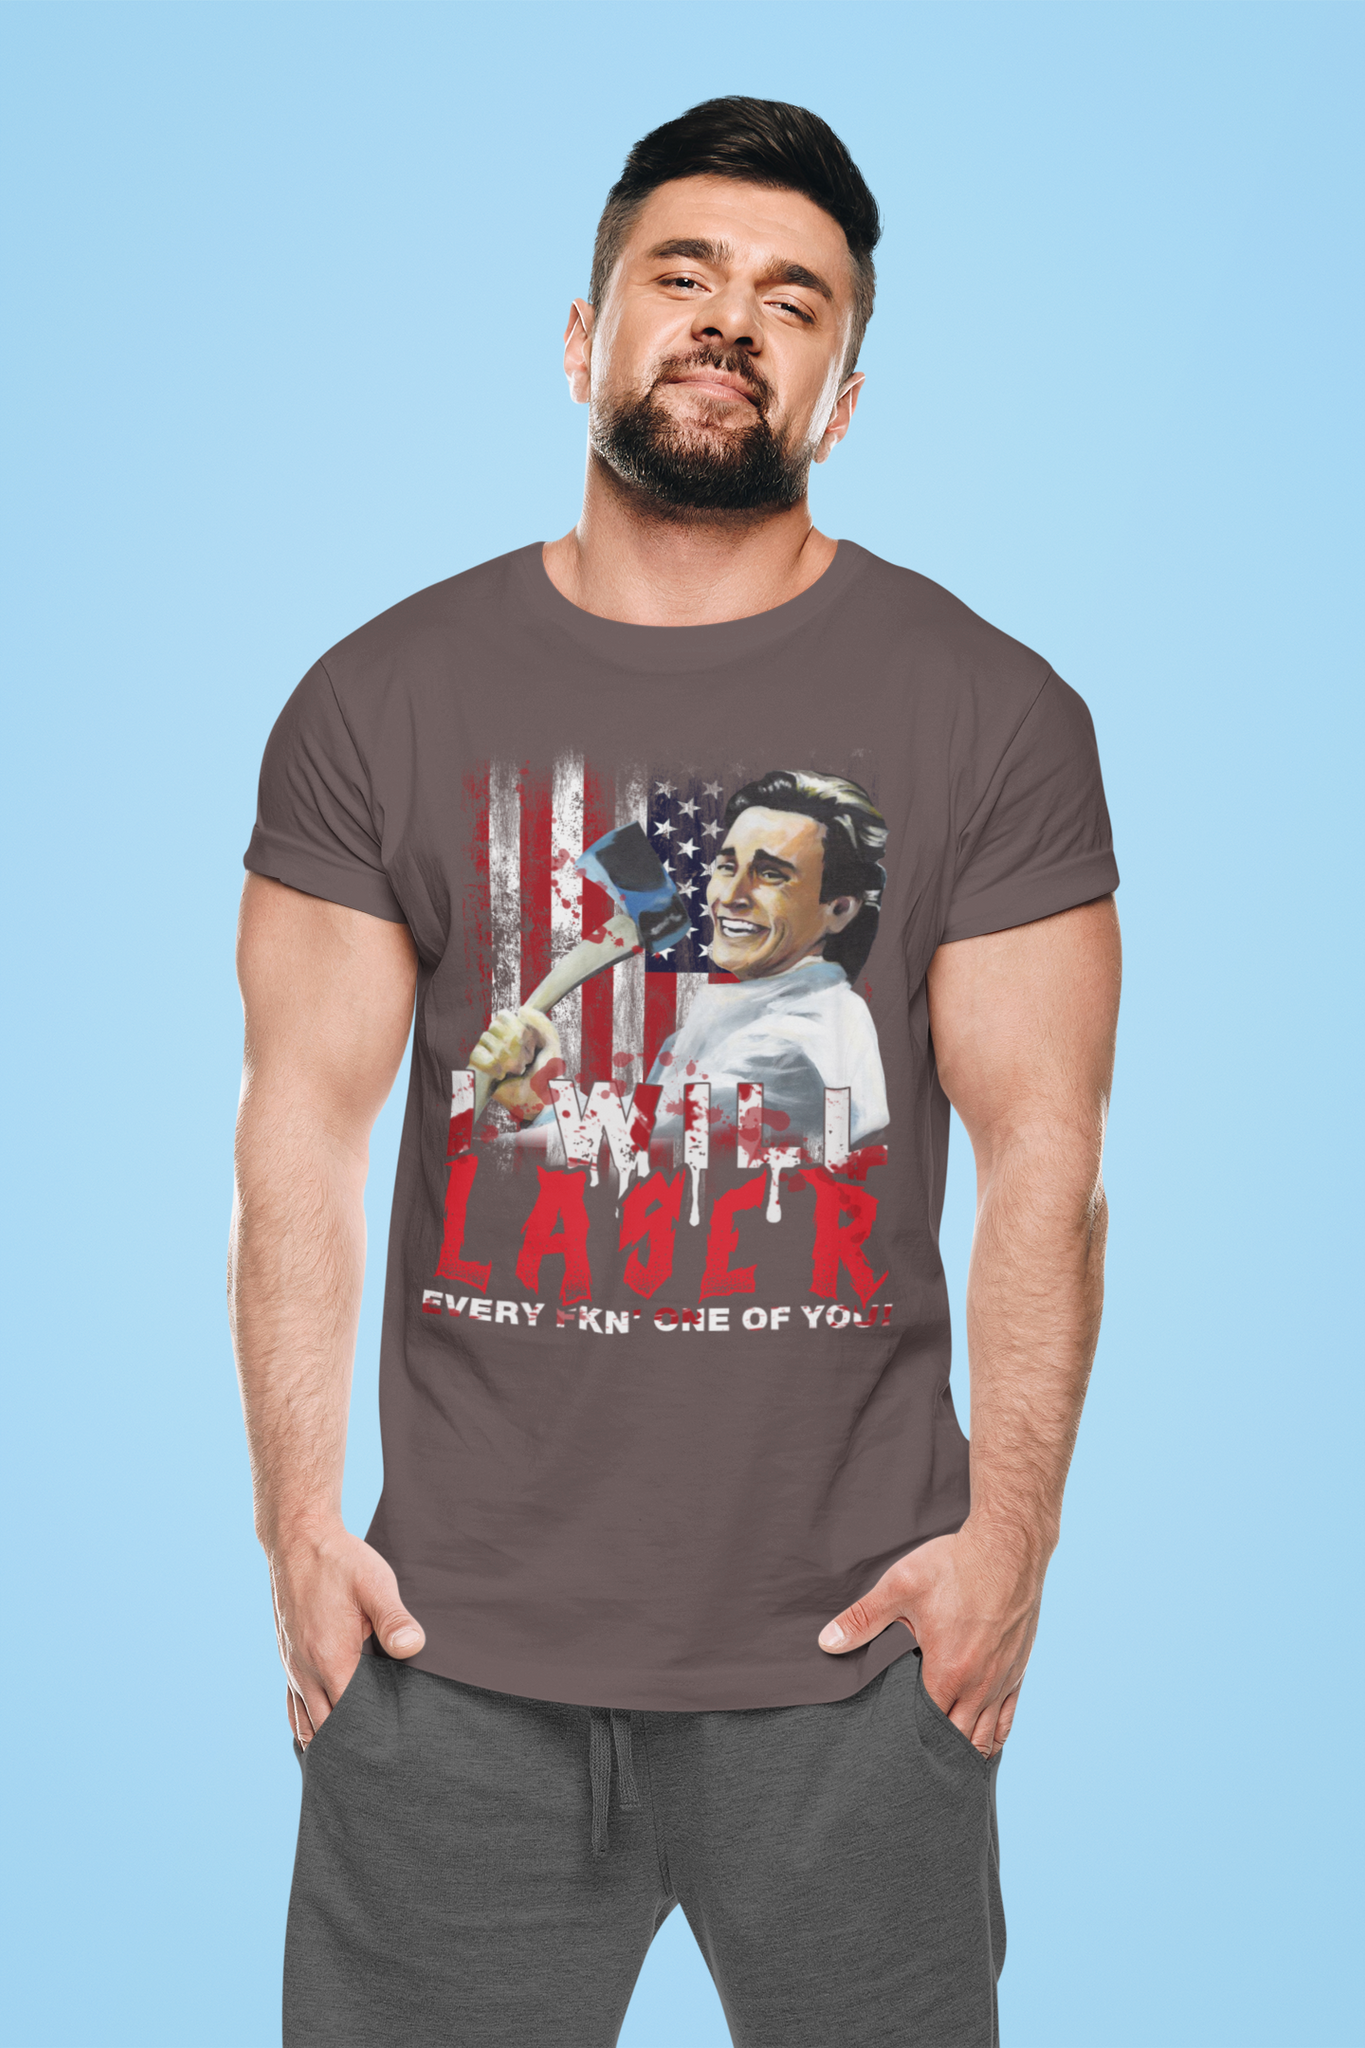 American Psycho T Shirt, Patrick Bateman T Shirt, I Will Laser Every One Of You Tshirt